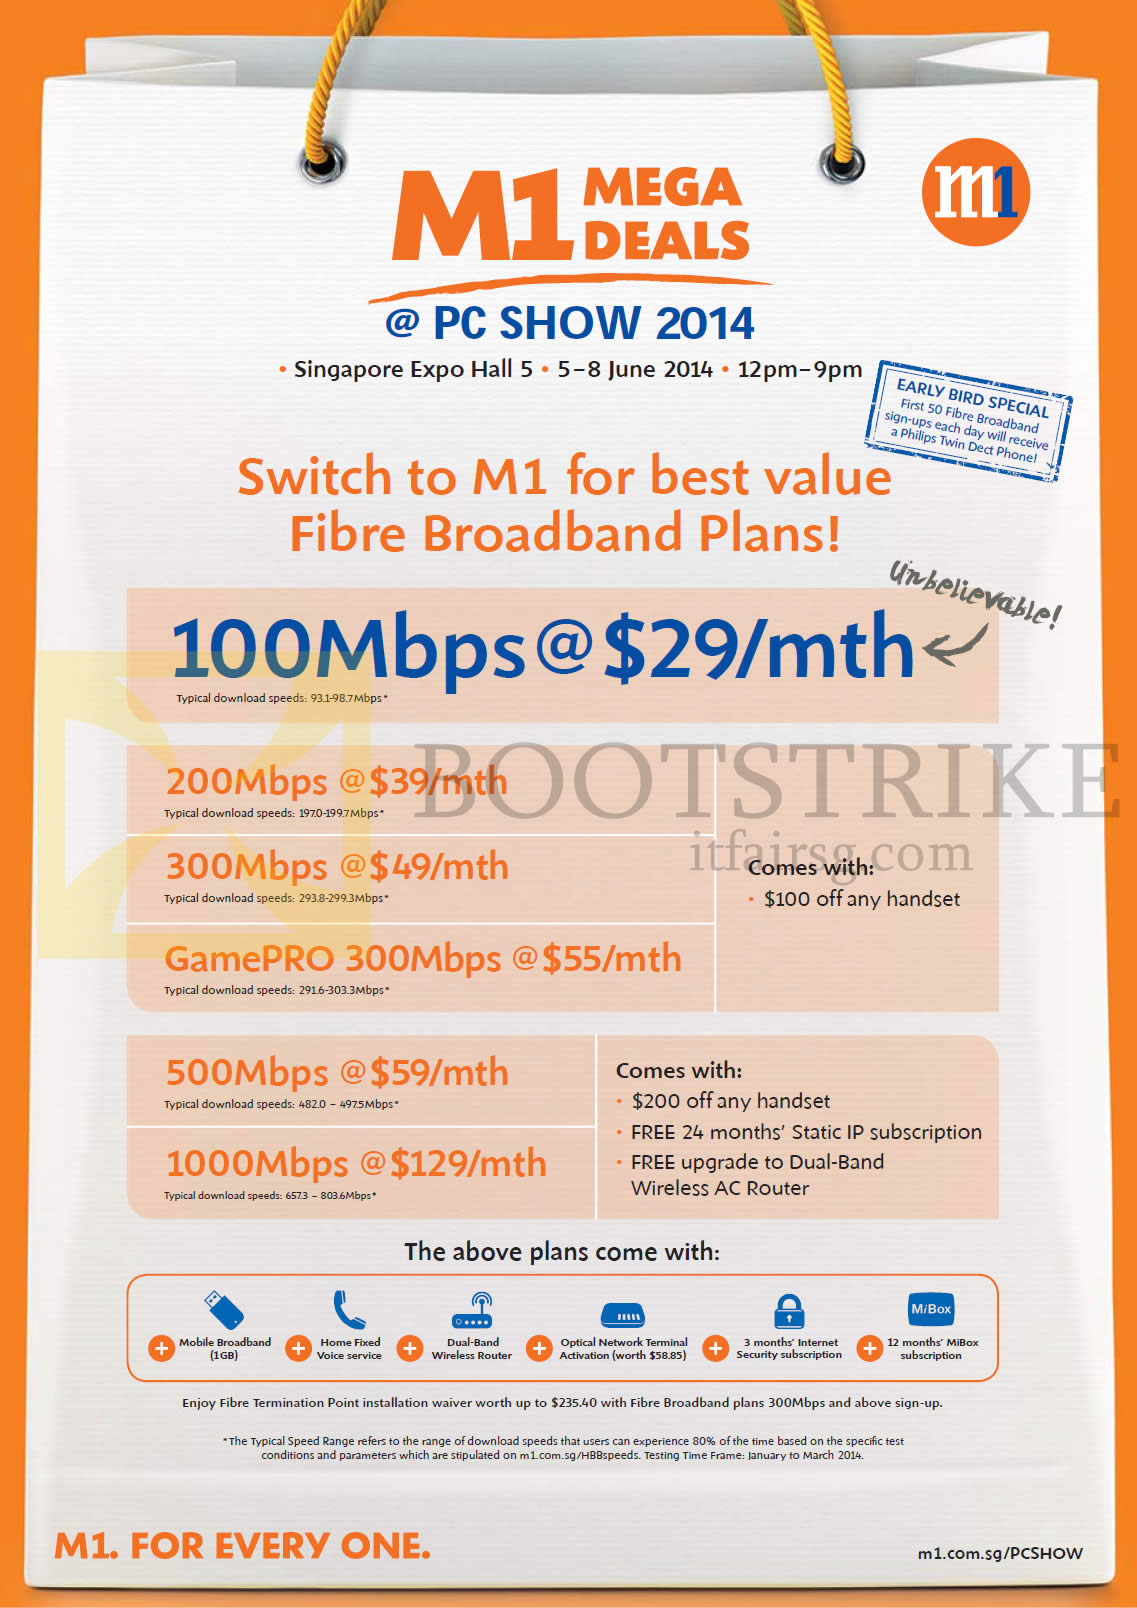 PC SHOW 2014 price list image brochure of M1 Broadband Fibre 100Mbps 29.00, 200Mbps 39.00, 300Mbps 49.00, GamePro 300Mbps 55.00, 500Mbps 59.00, 1Gbps 129.00